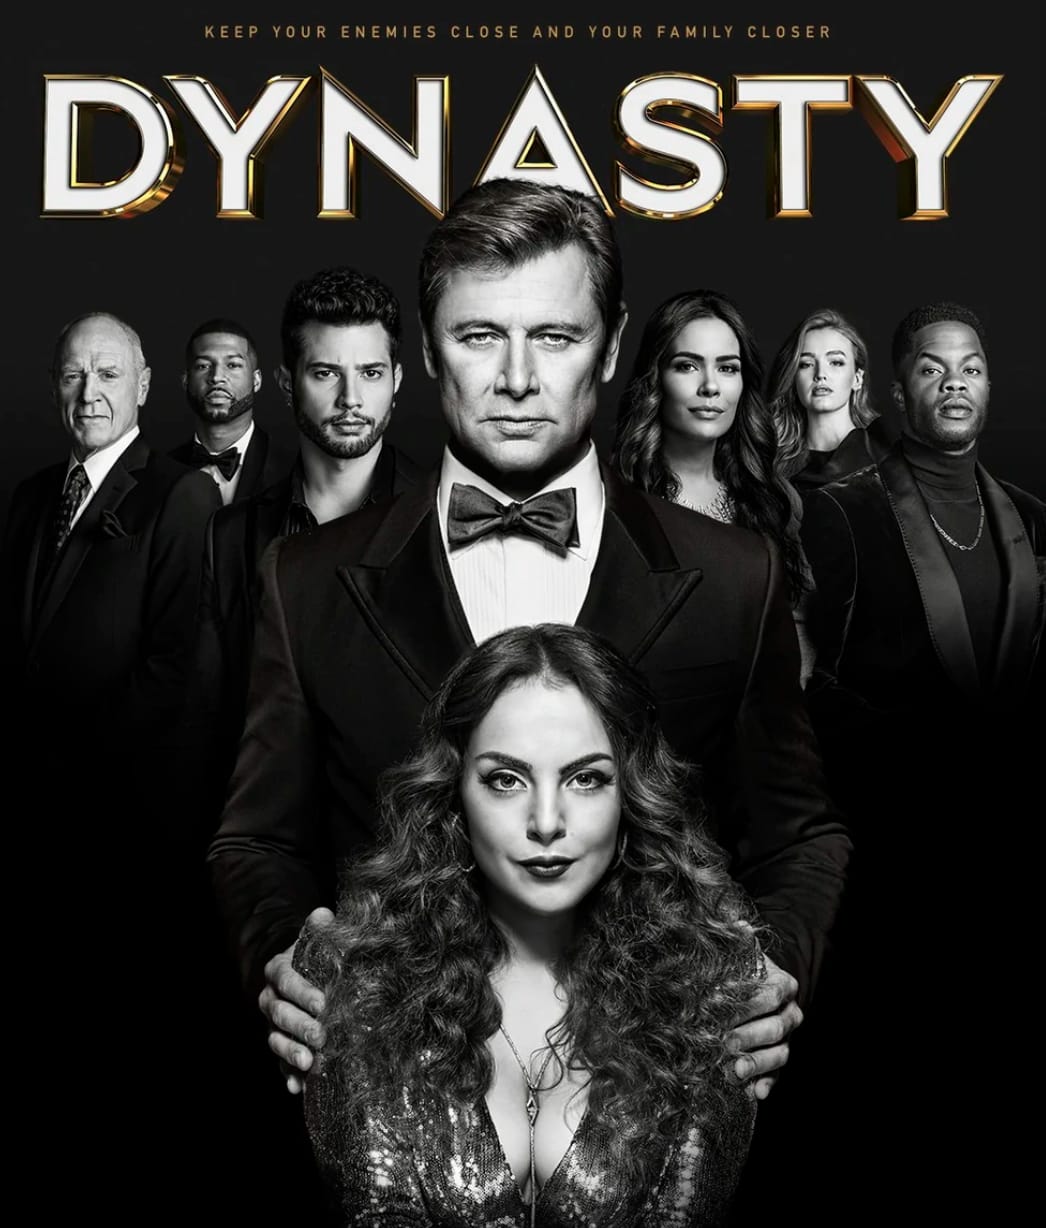 https://cinepop.com.br/wp-content/uploads/2020/05/dynasty-season-3-poster.jpg